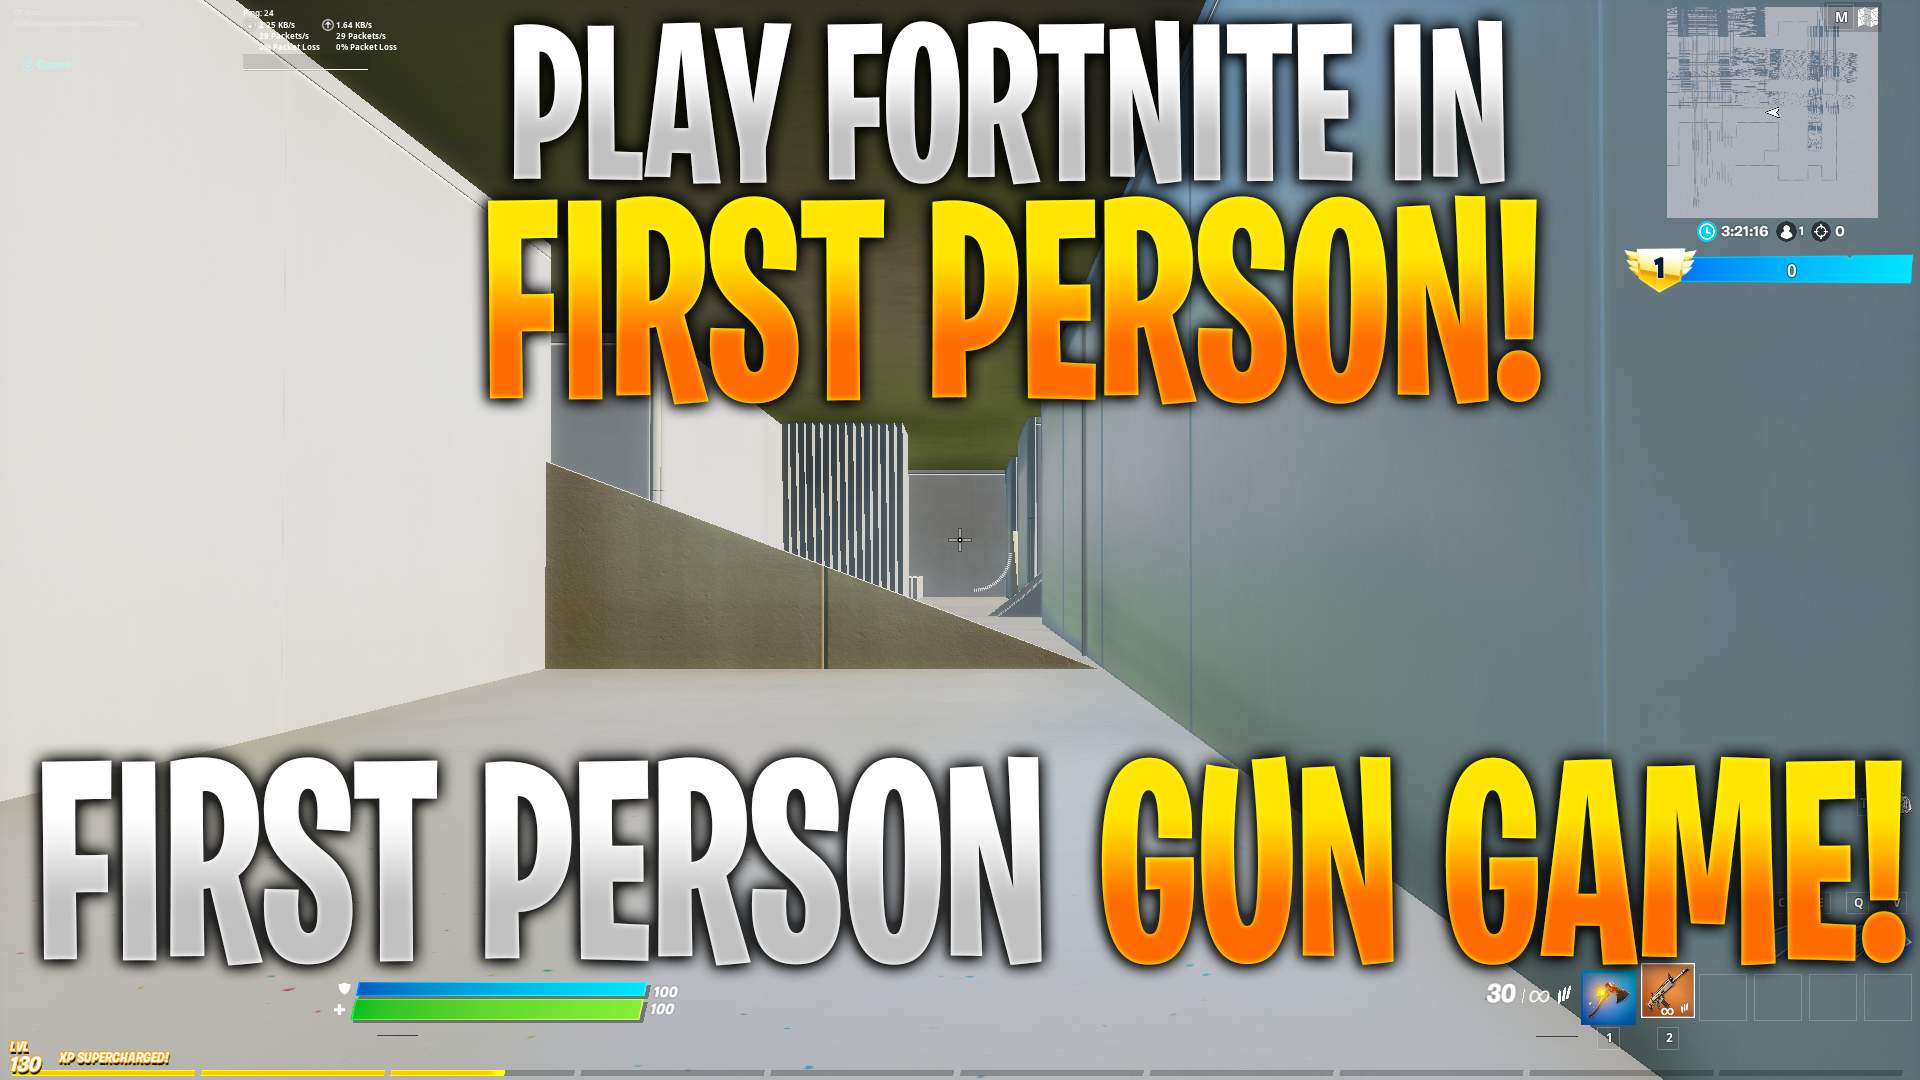 FIRST PERSON GUN GAME! image 2